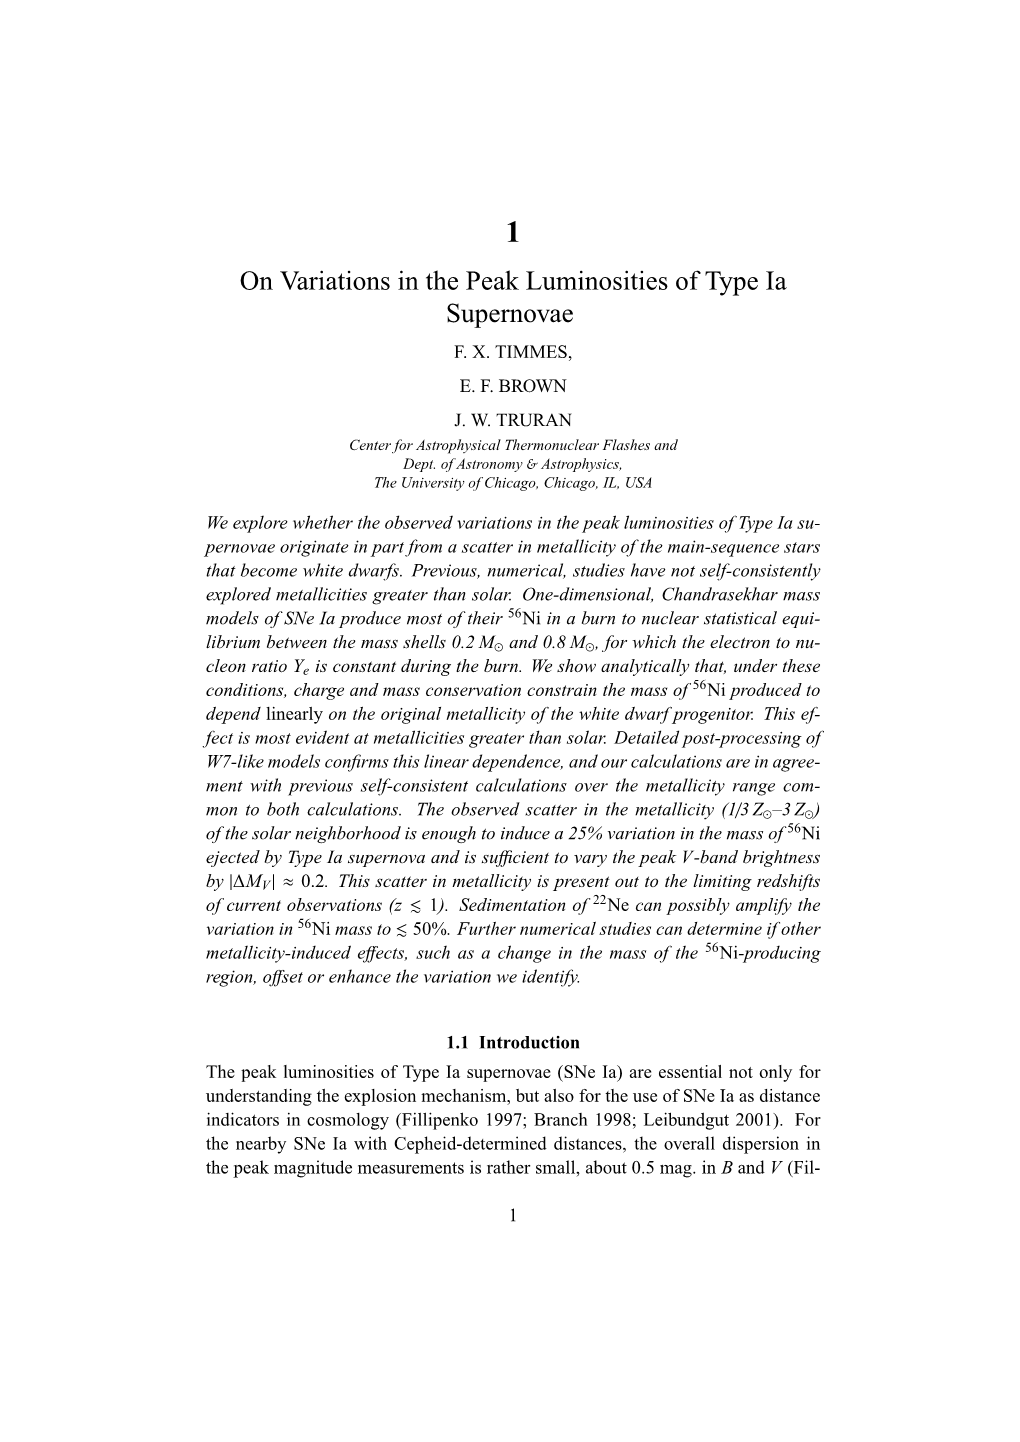 On Variations in the Peak Luminosities of Type Ia Supernovae F